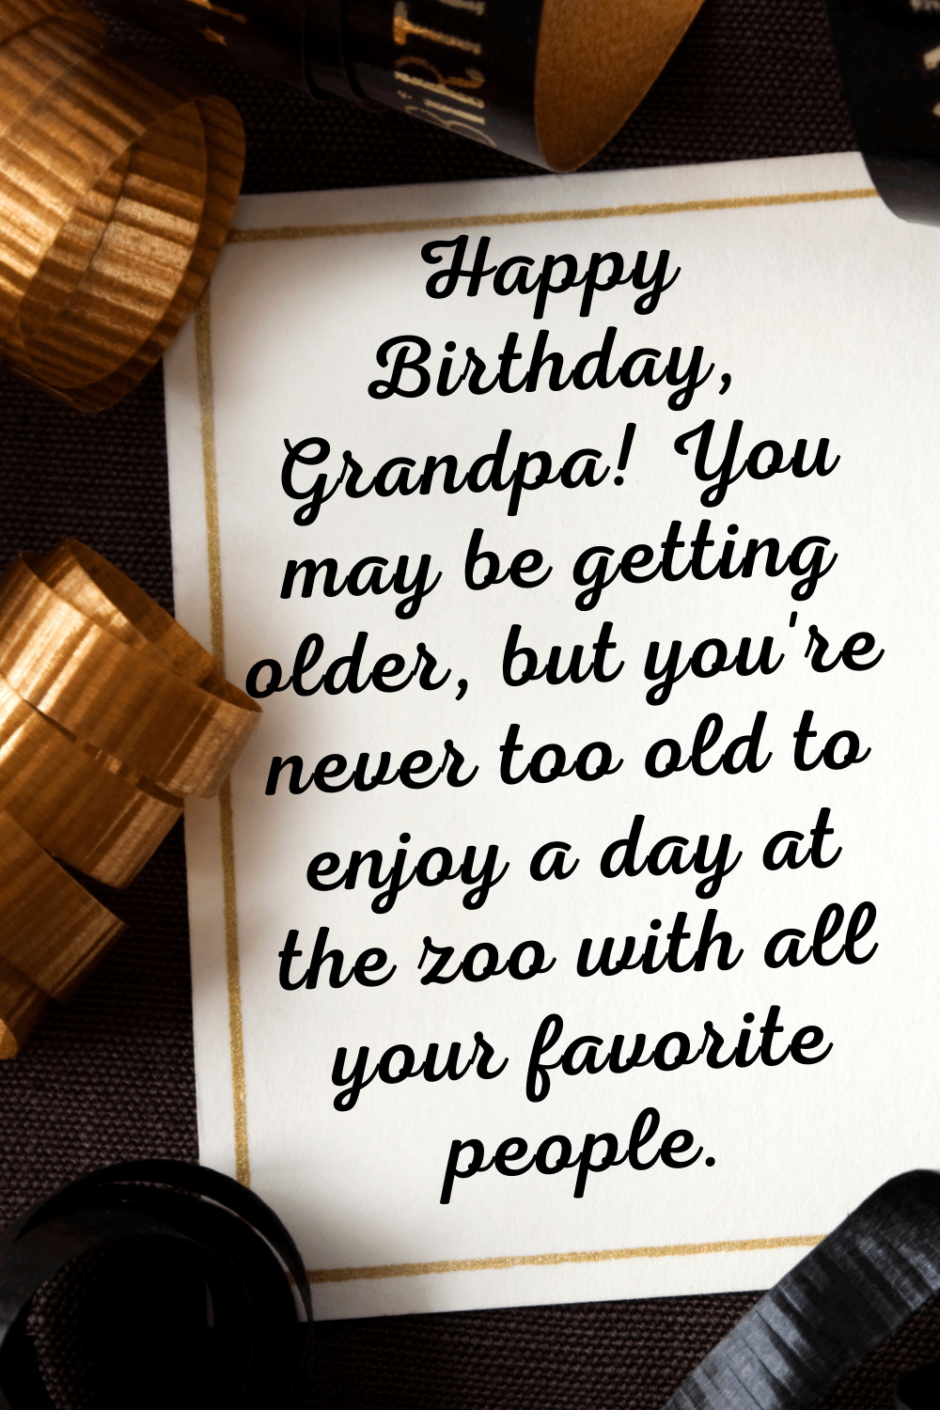 Happy Birthday Sayings for Grandpa